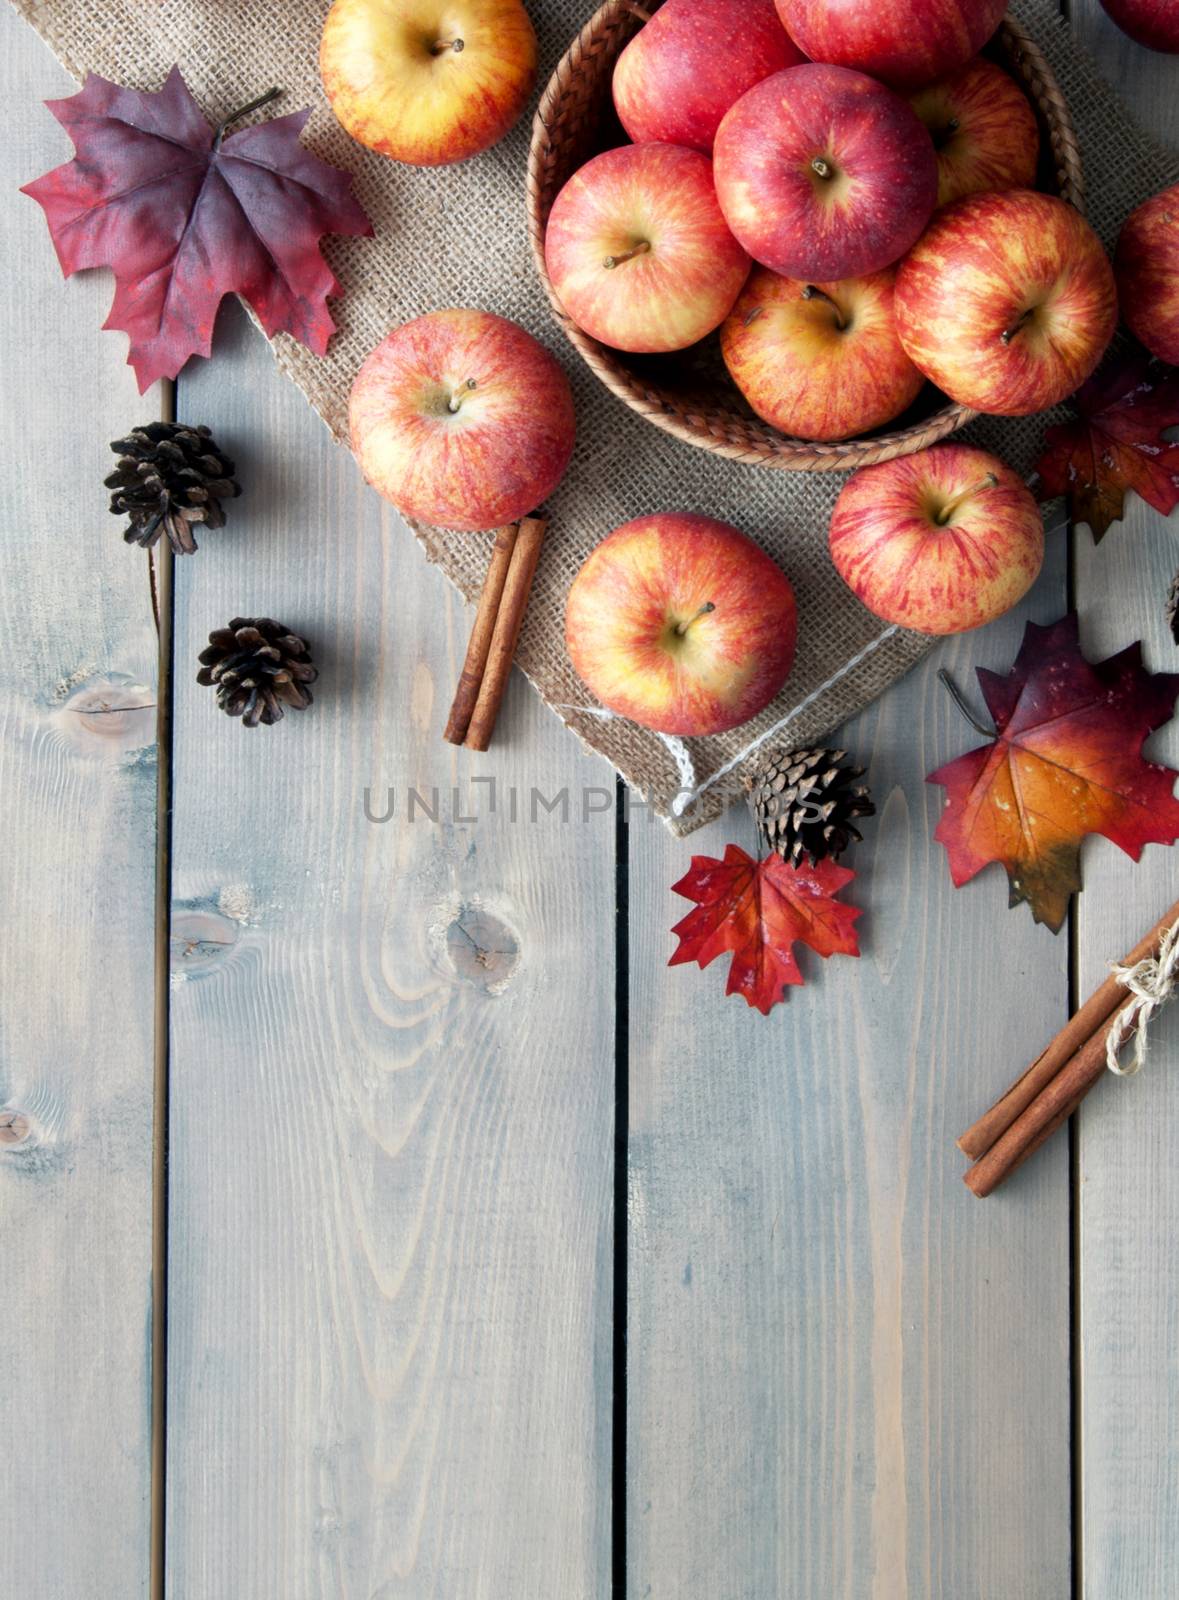 Autumn background, natural produce  by unikpix